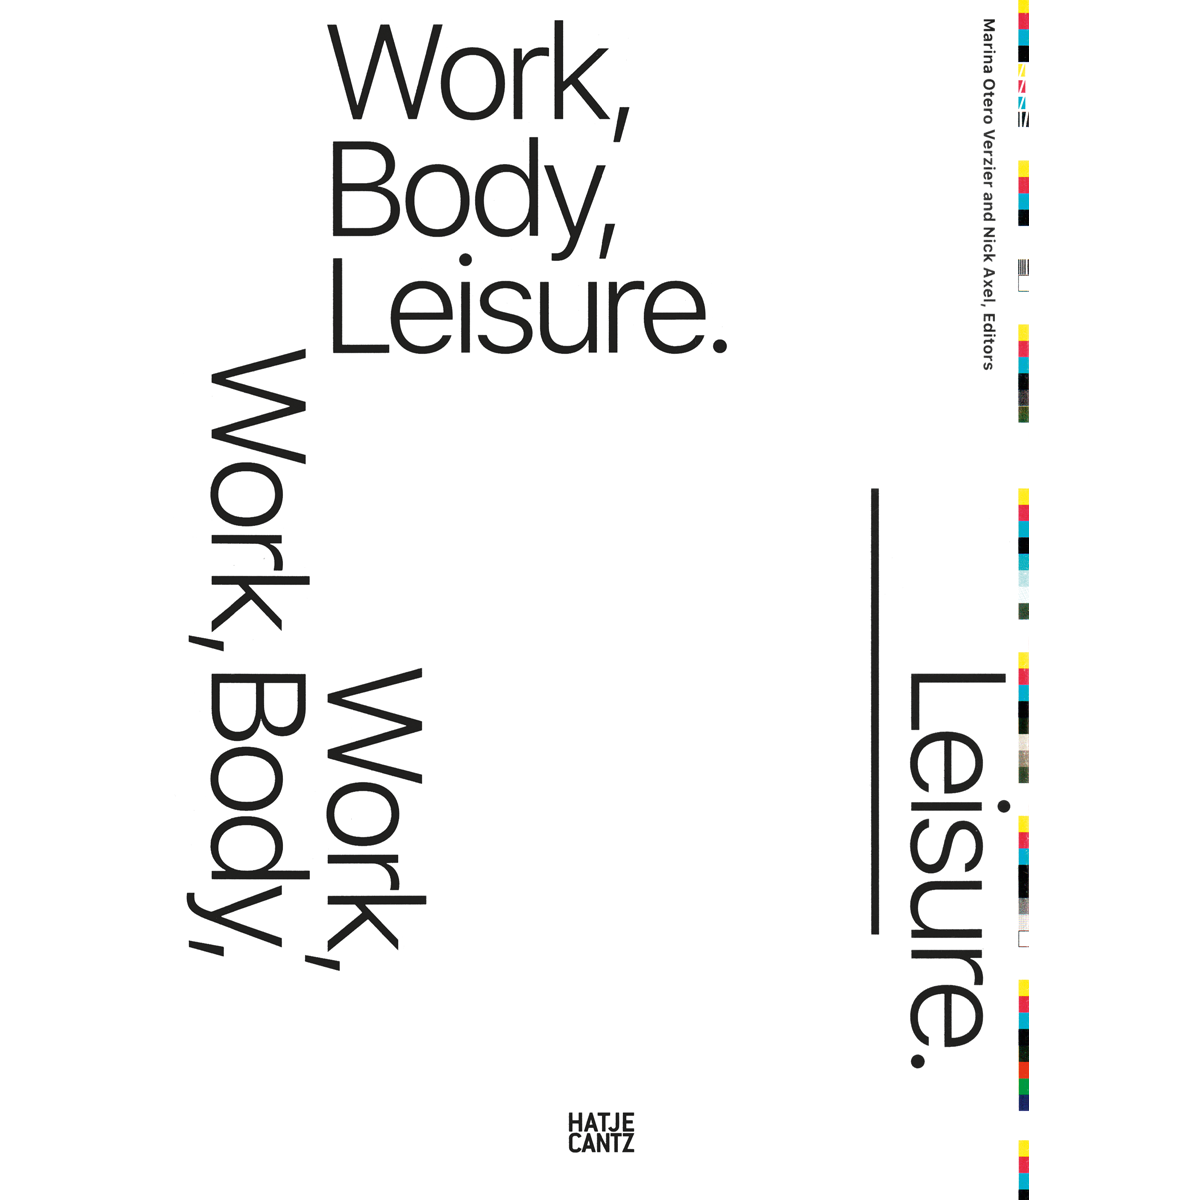 Work, Body, Leisure